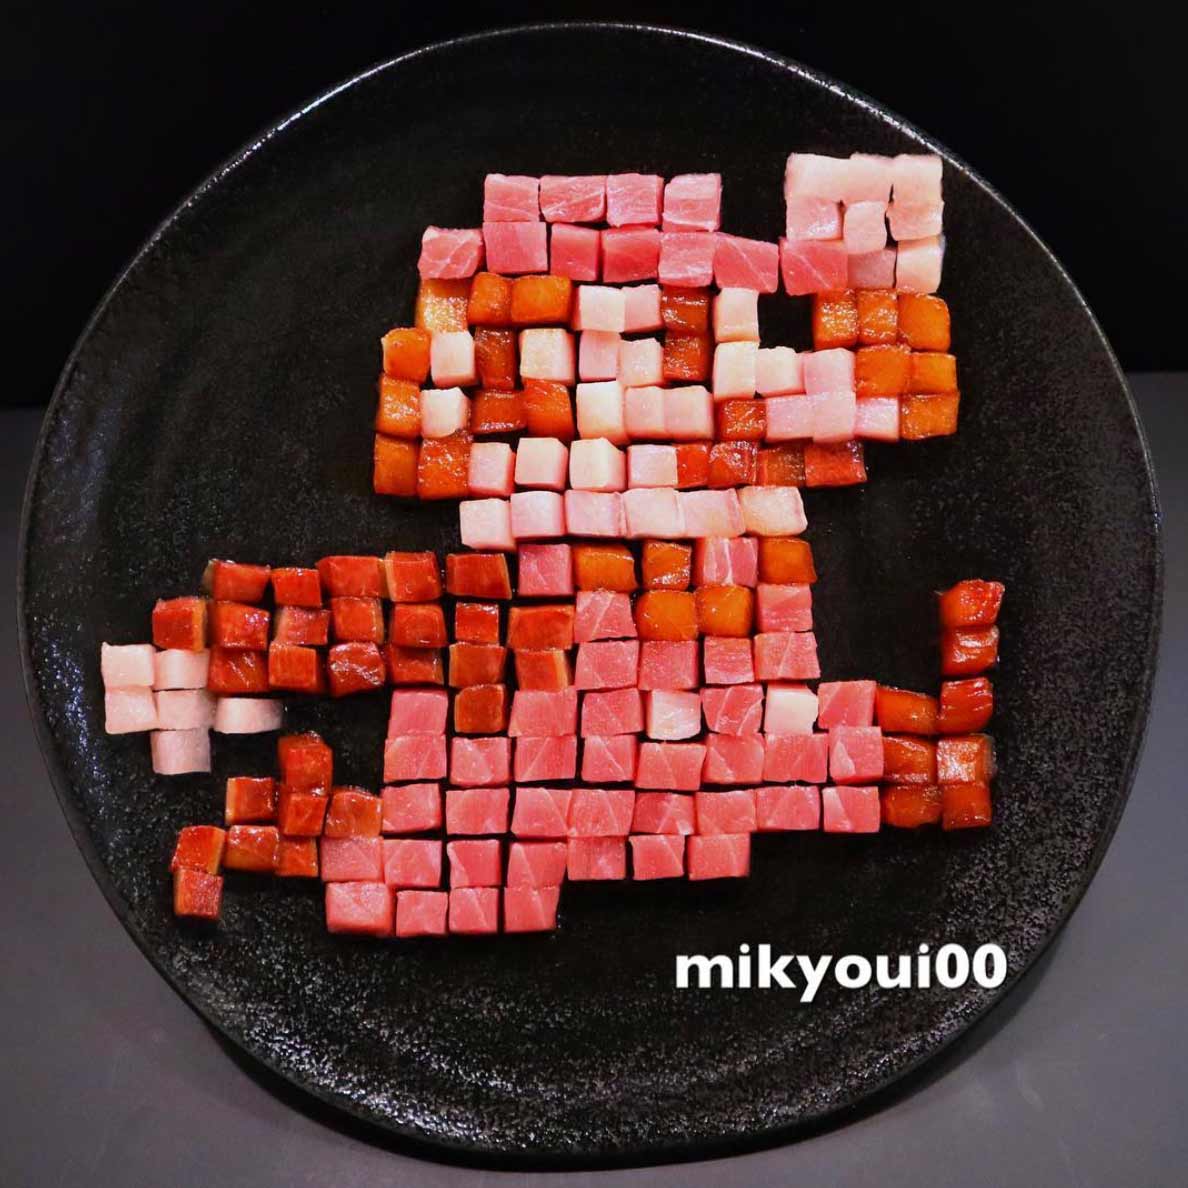 Wundervolle Sashimi-Kunstwerke von mikyou mikyou-sashimi-art-sushi-fischbilder_12 